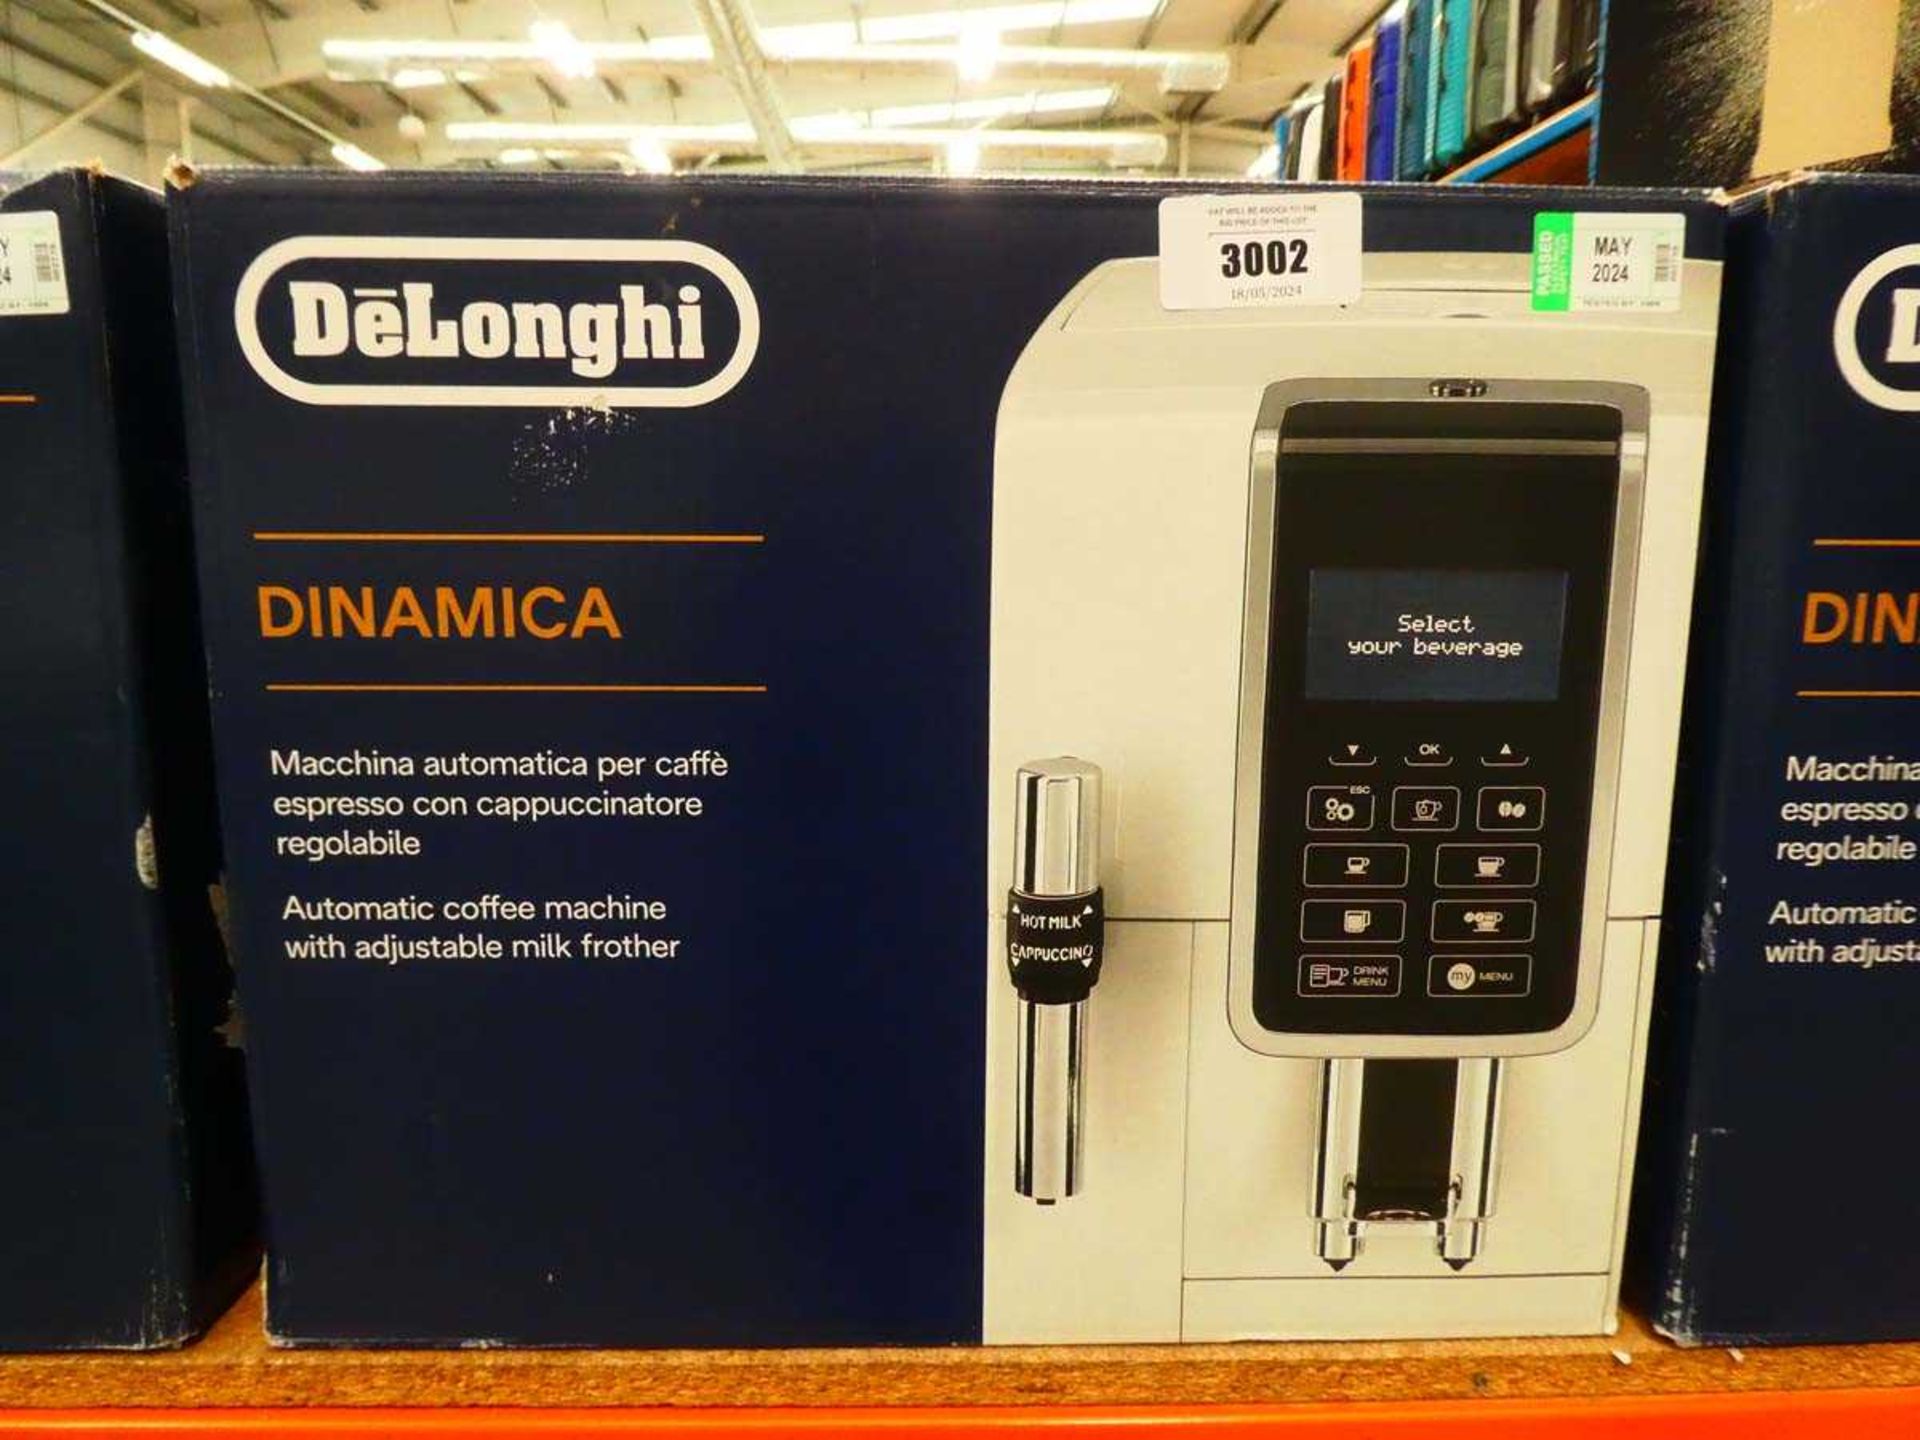 +VAT De'longhi Dinamica coffee machine